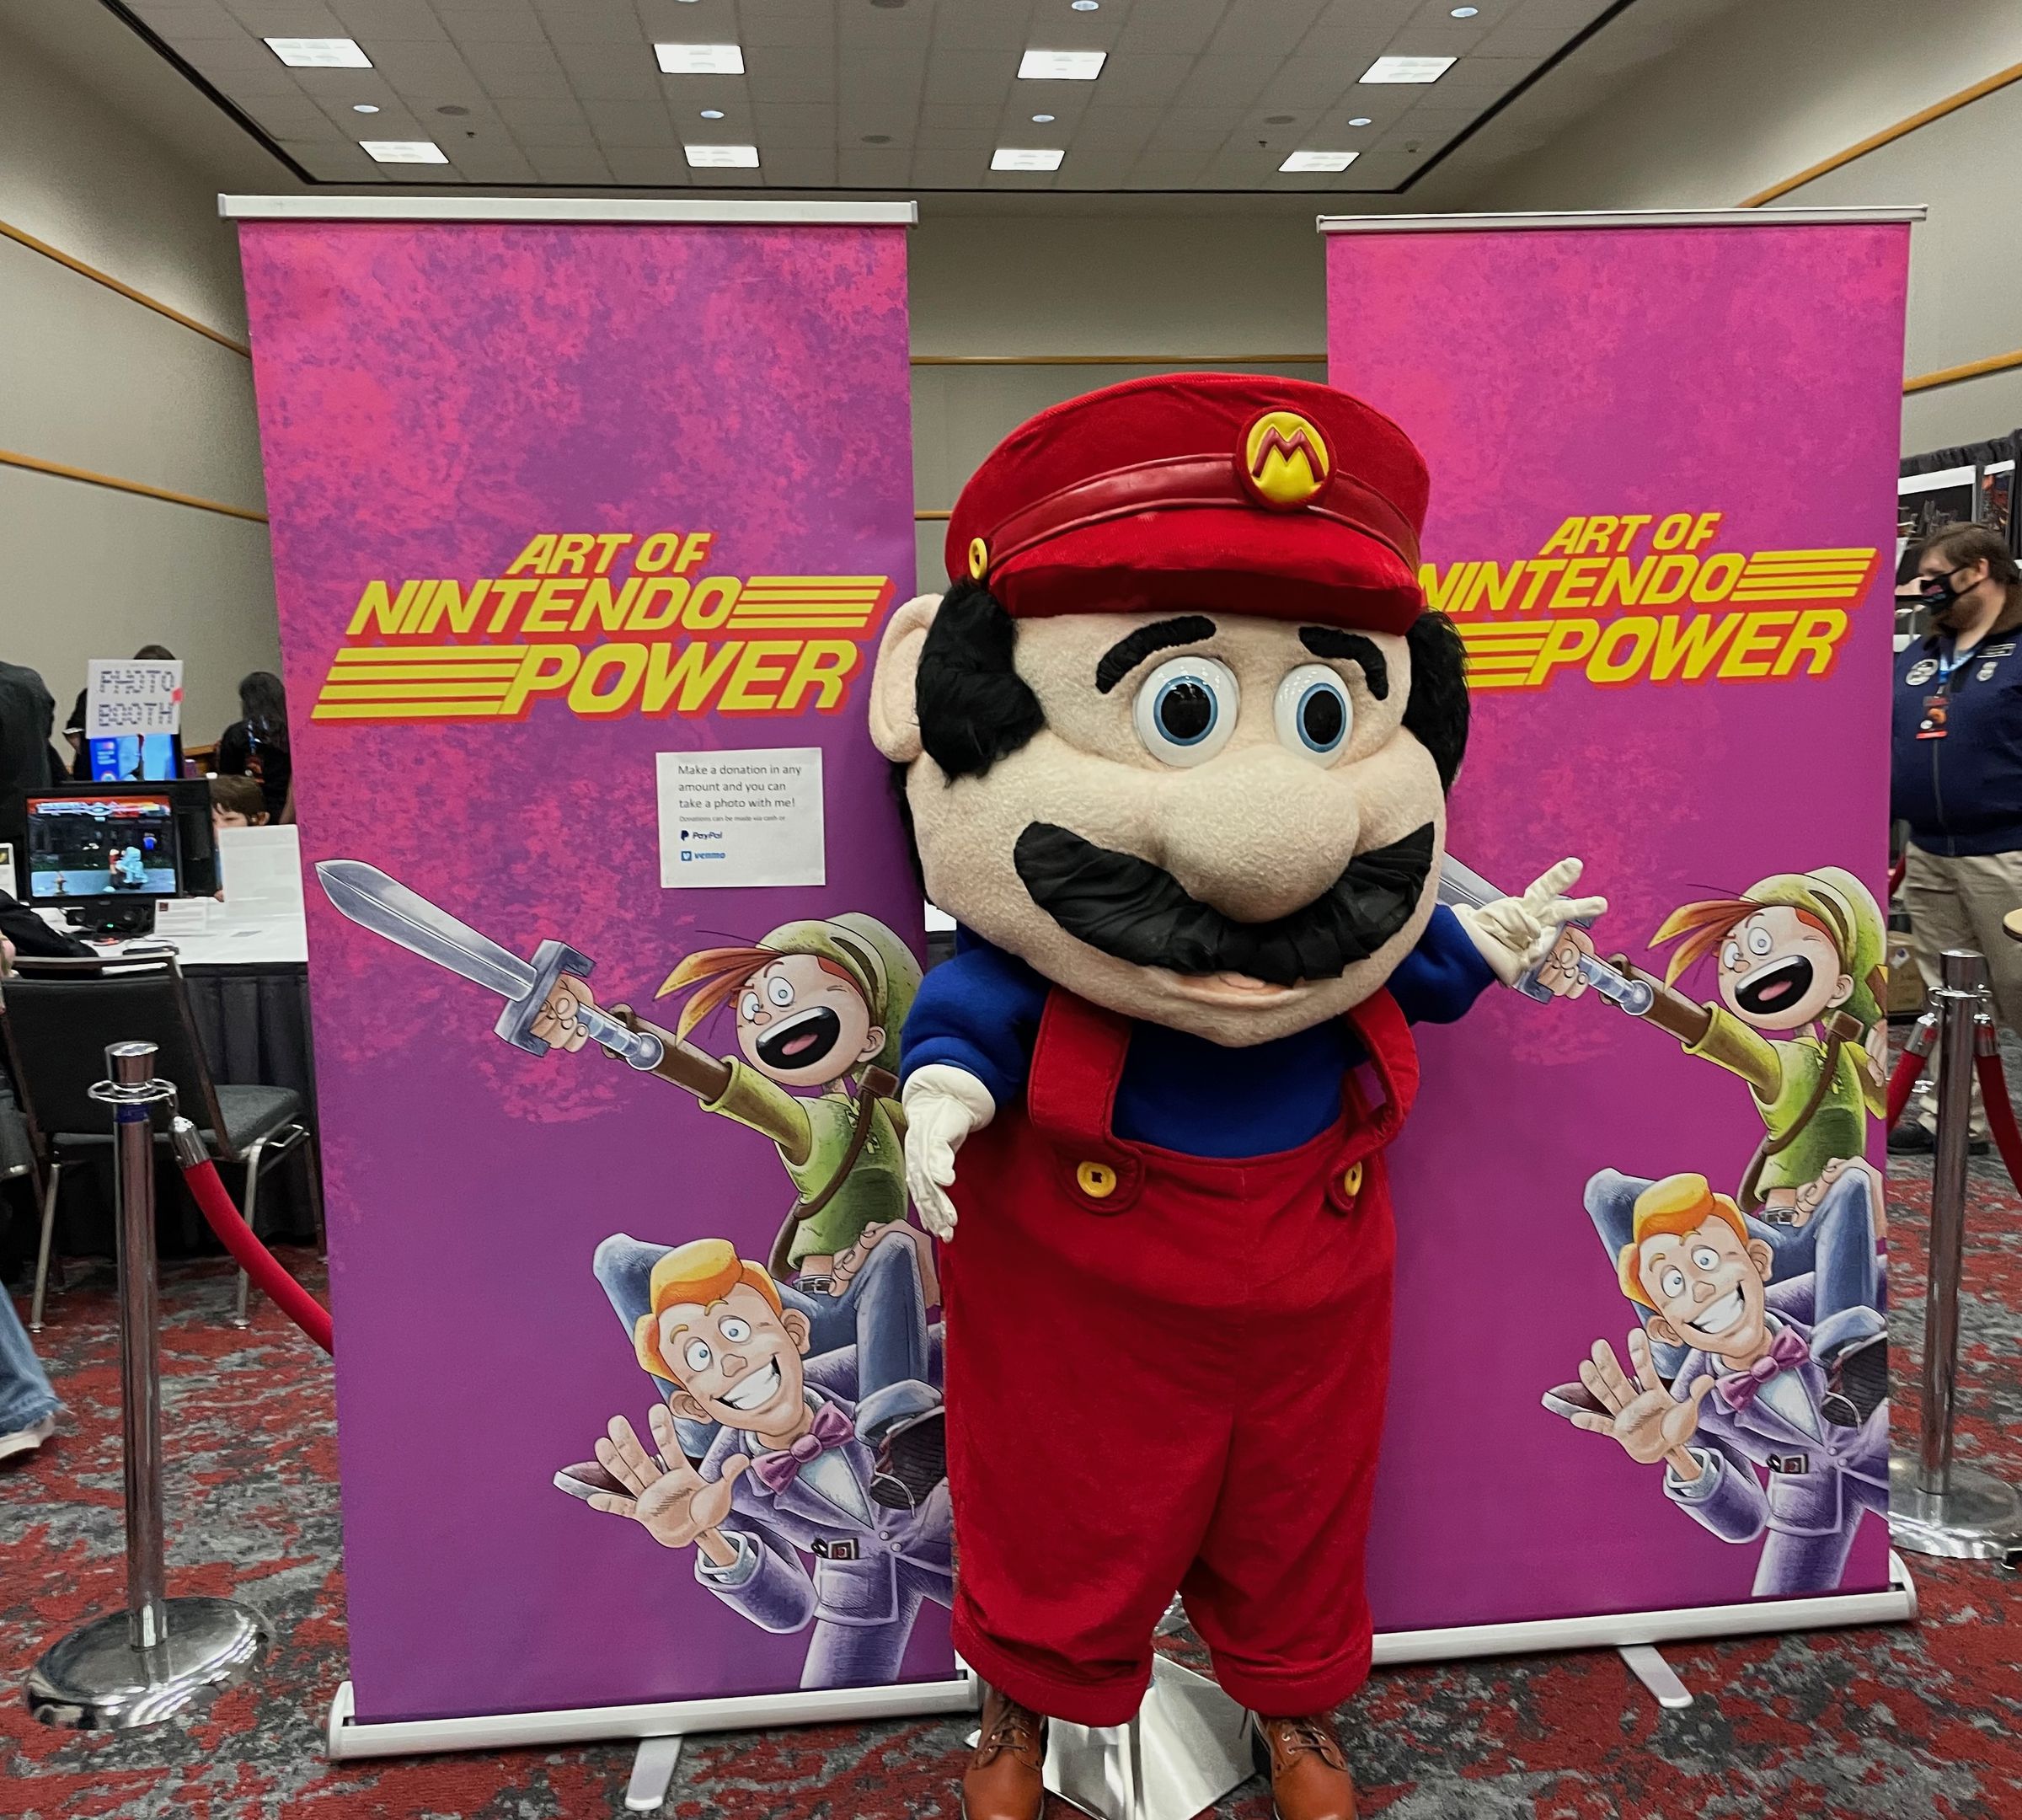 A mascot costume of Mario at the “Art of Nintendo Power” exhibit.